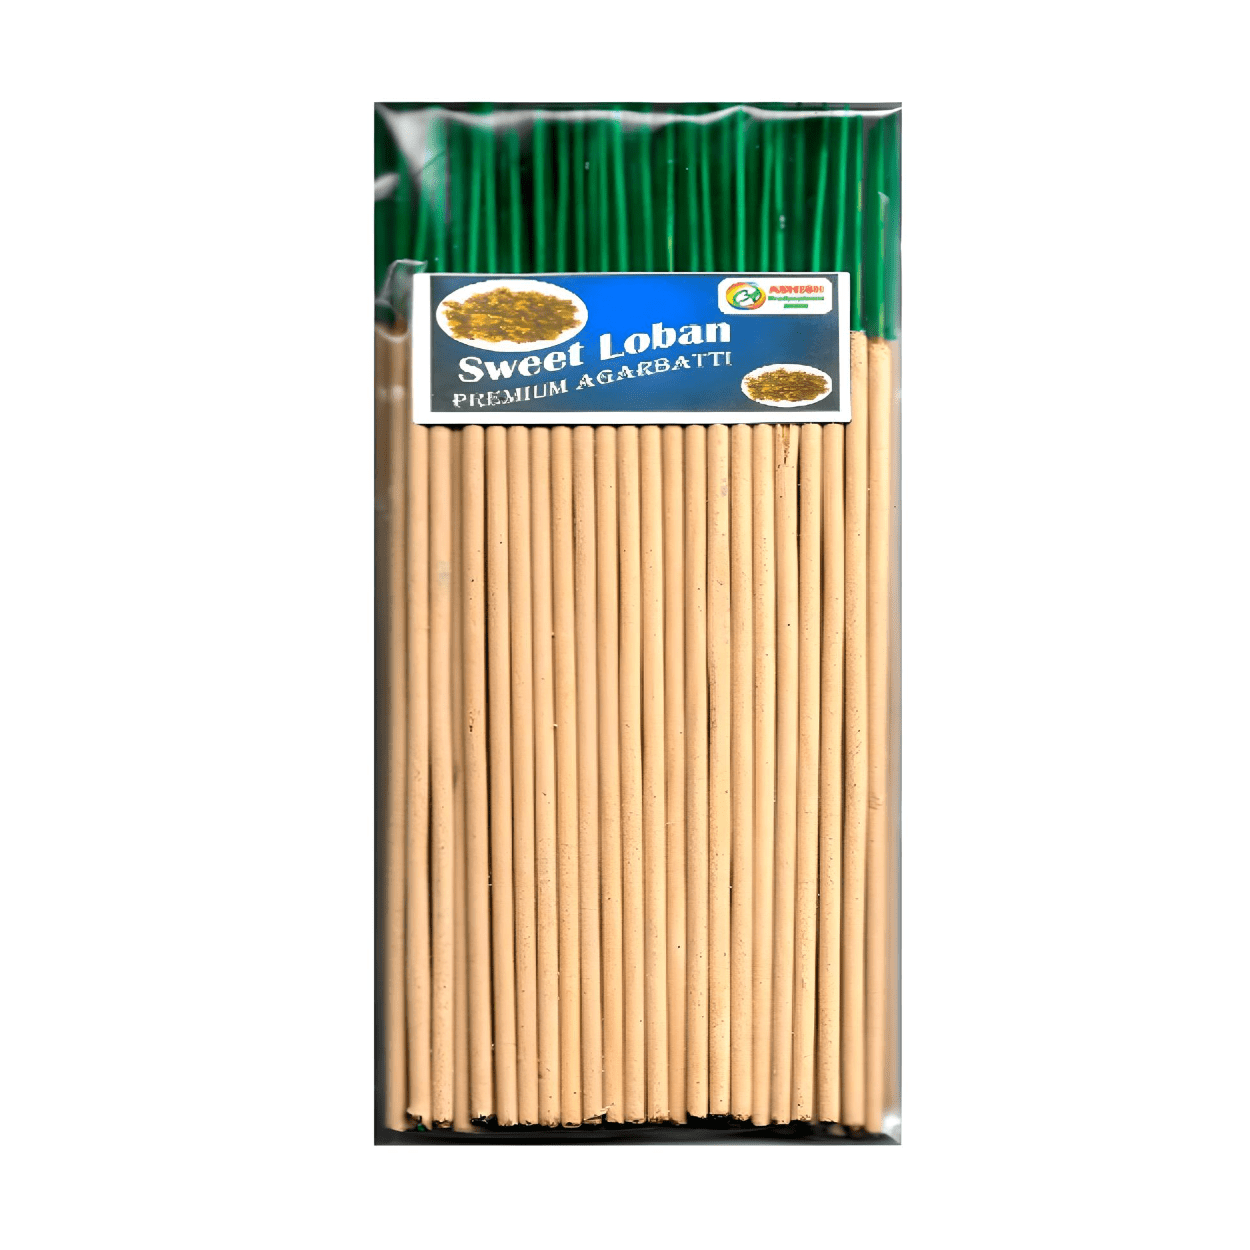 Sweet Loban Agarbatti Incense Sticks